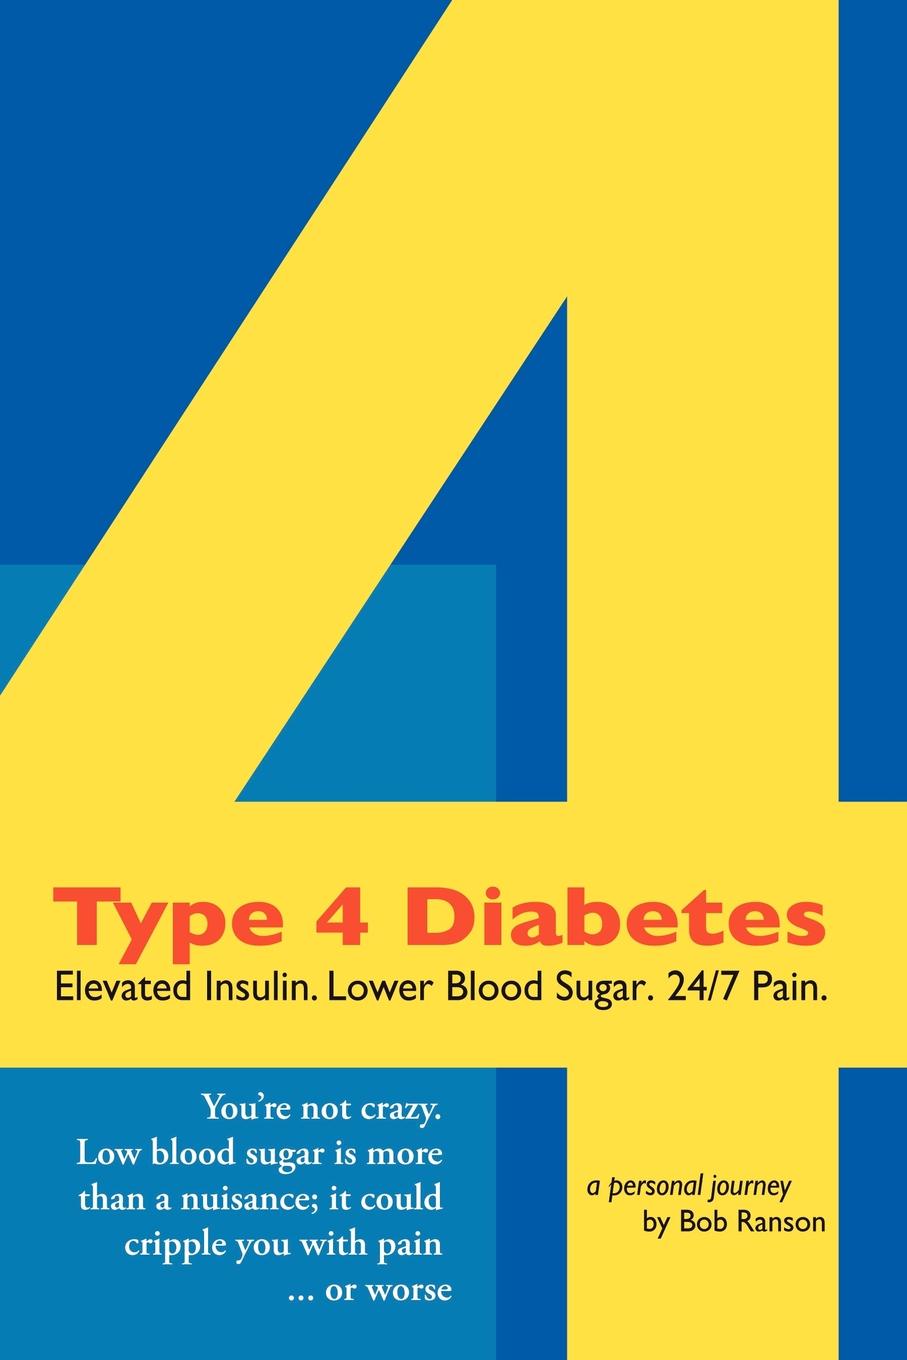 Type 4 Diabetes. Elevated Insulin. Lower Blood Sugar. 24/7 Pain.